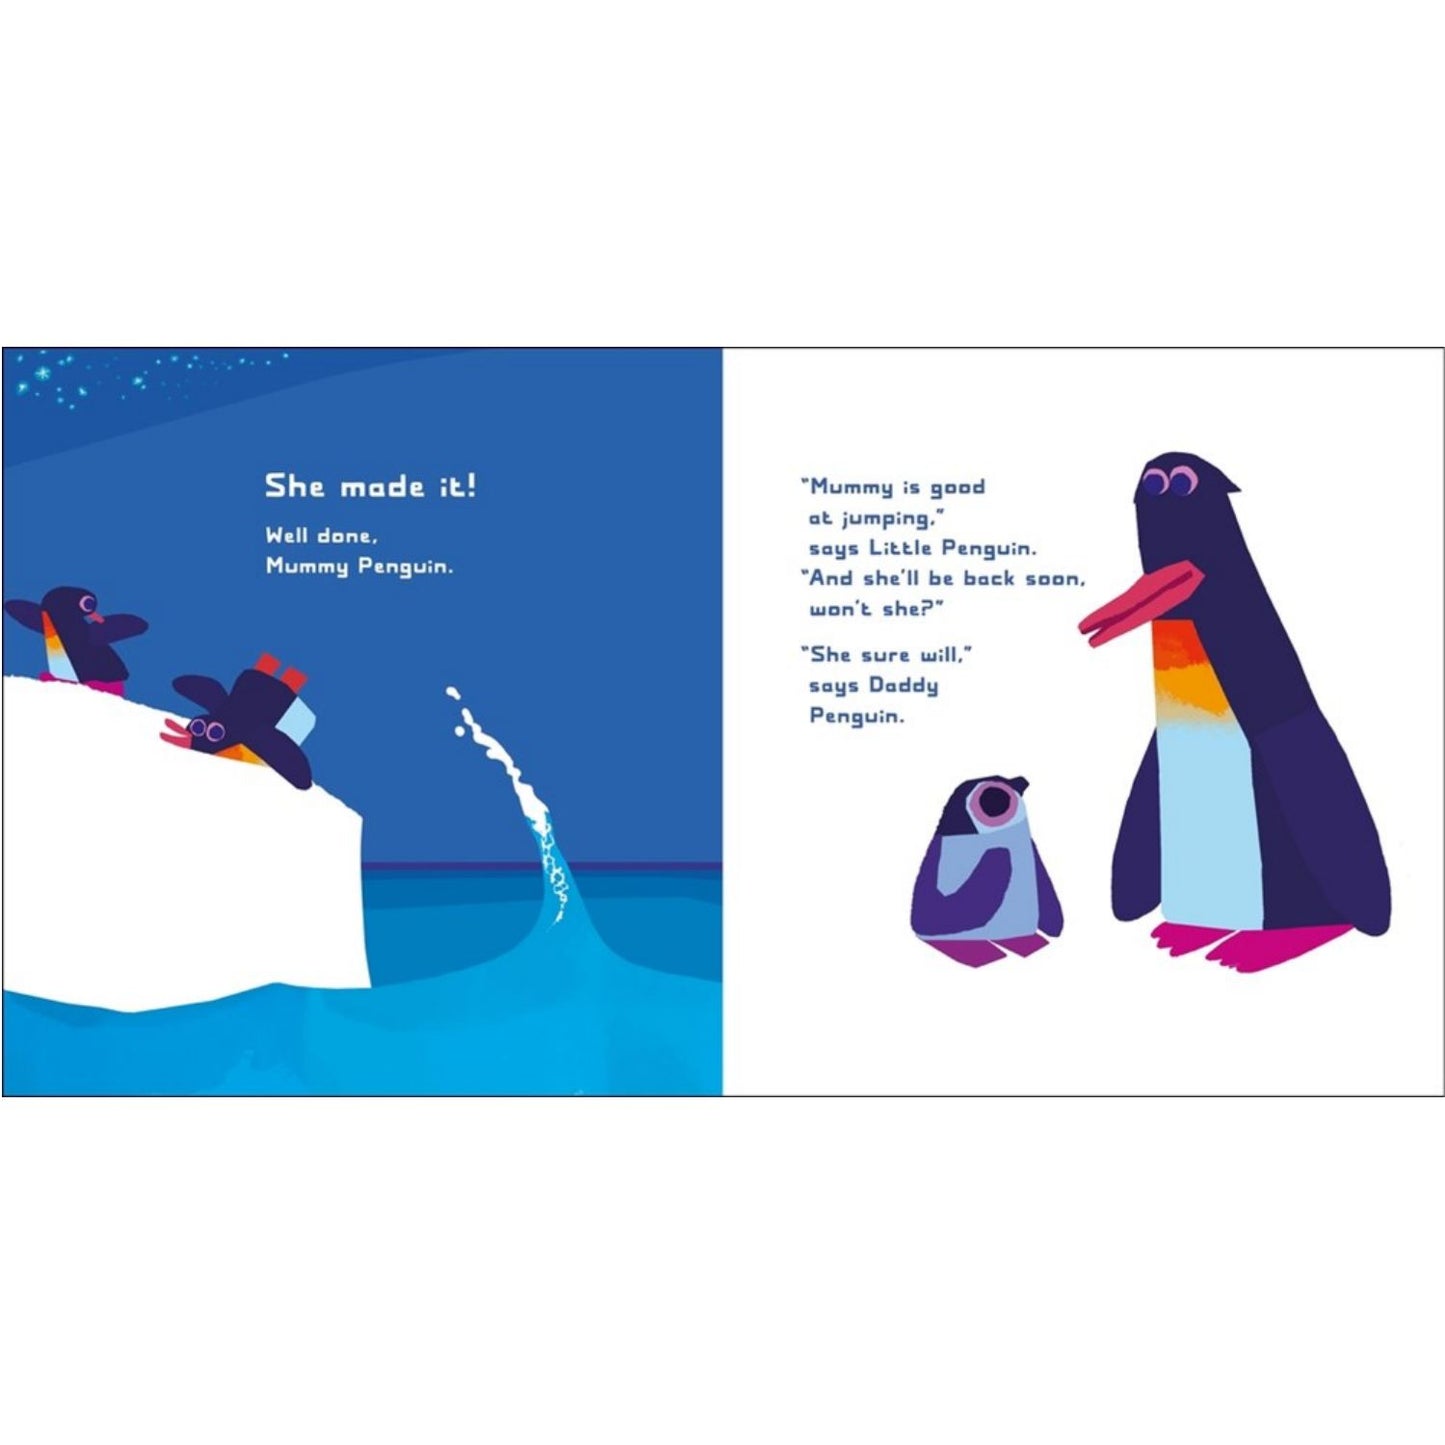 Well Done, Mummy Penguin | Hardcover | Children’s Book on Family Life